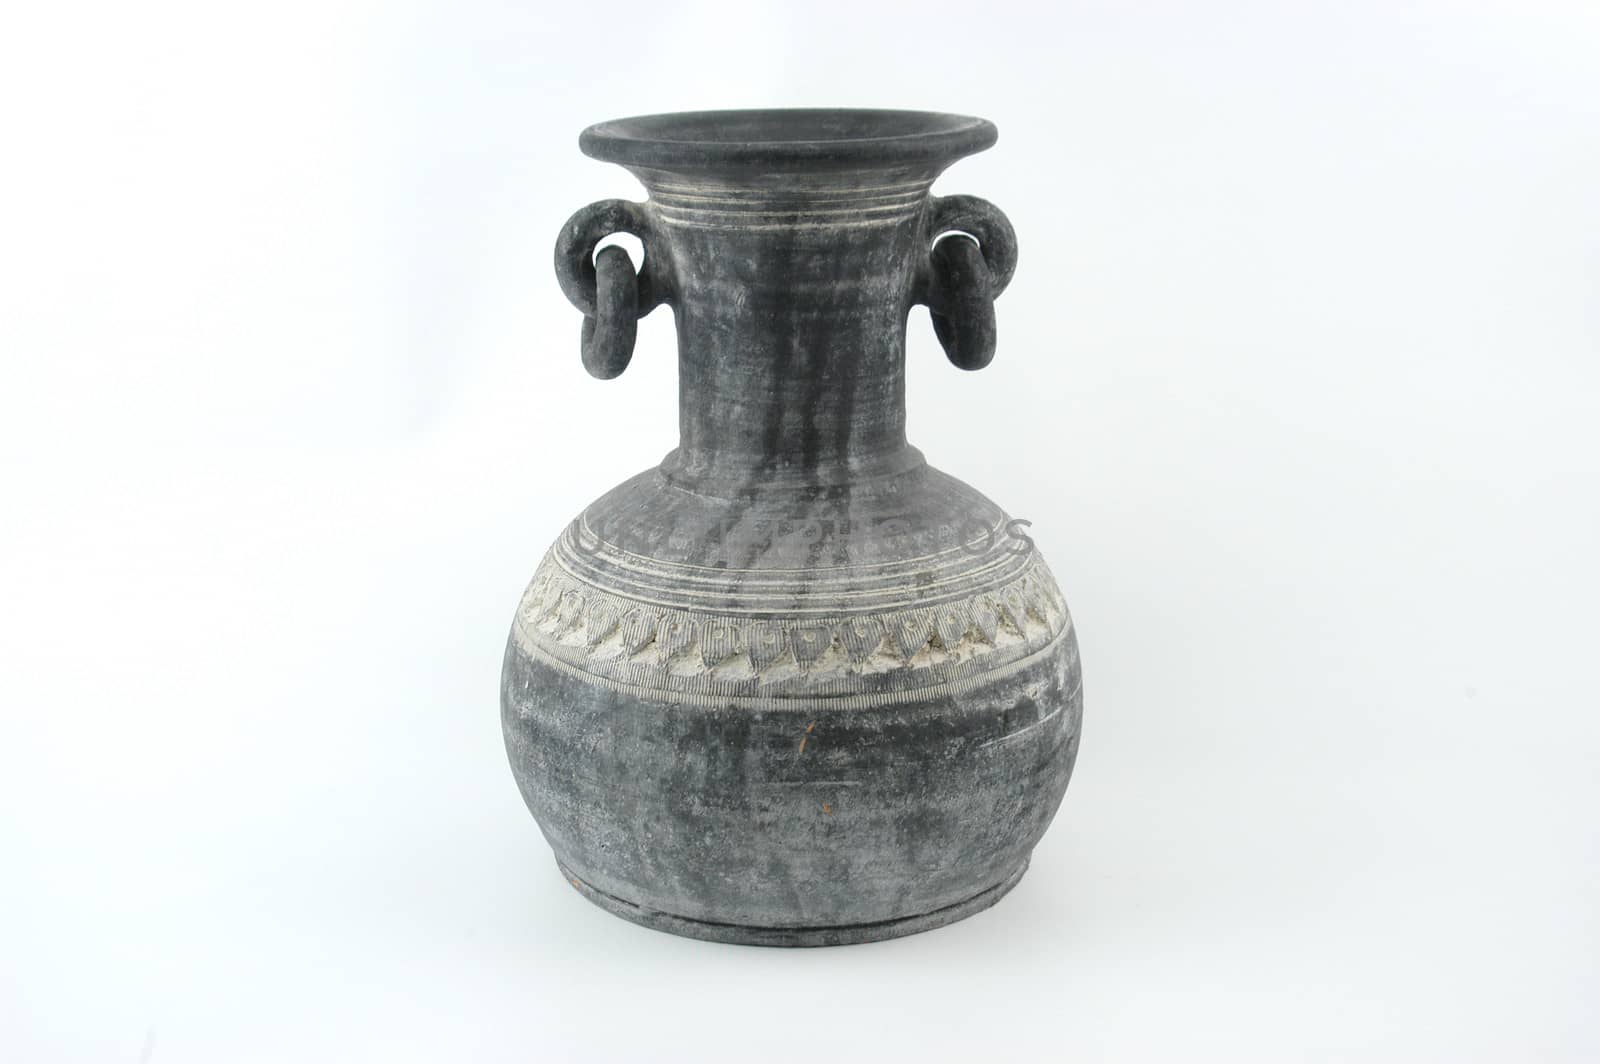 Close up of urn on white background